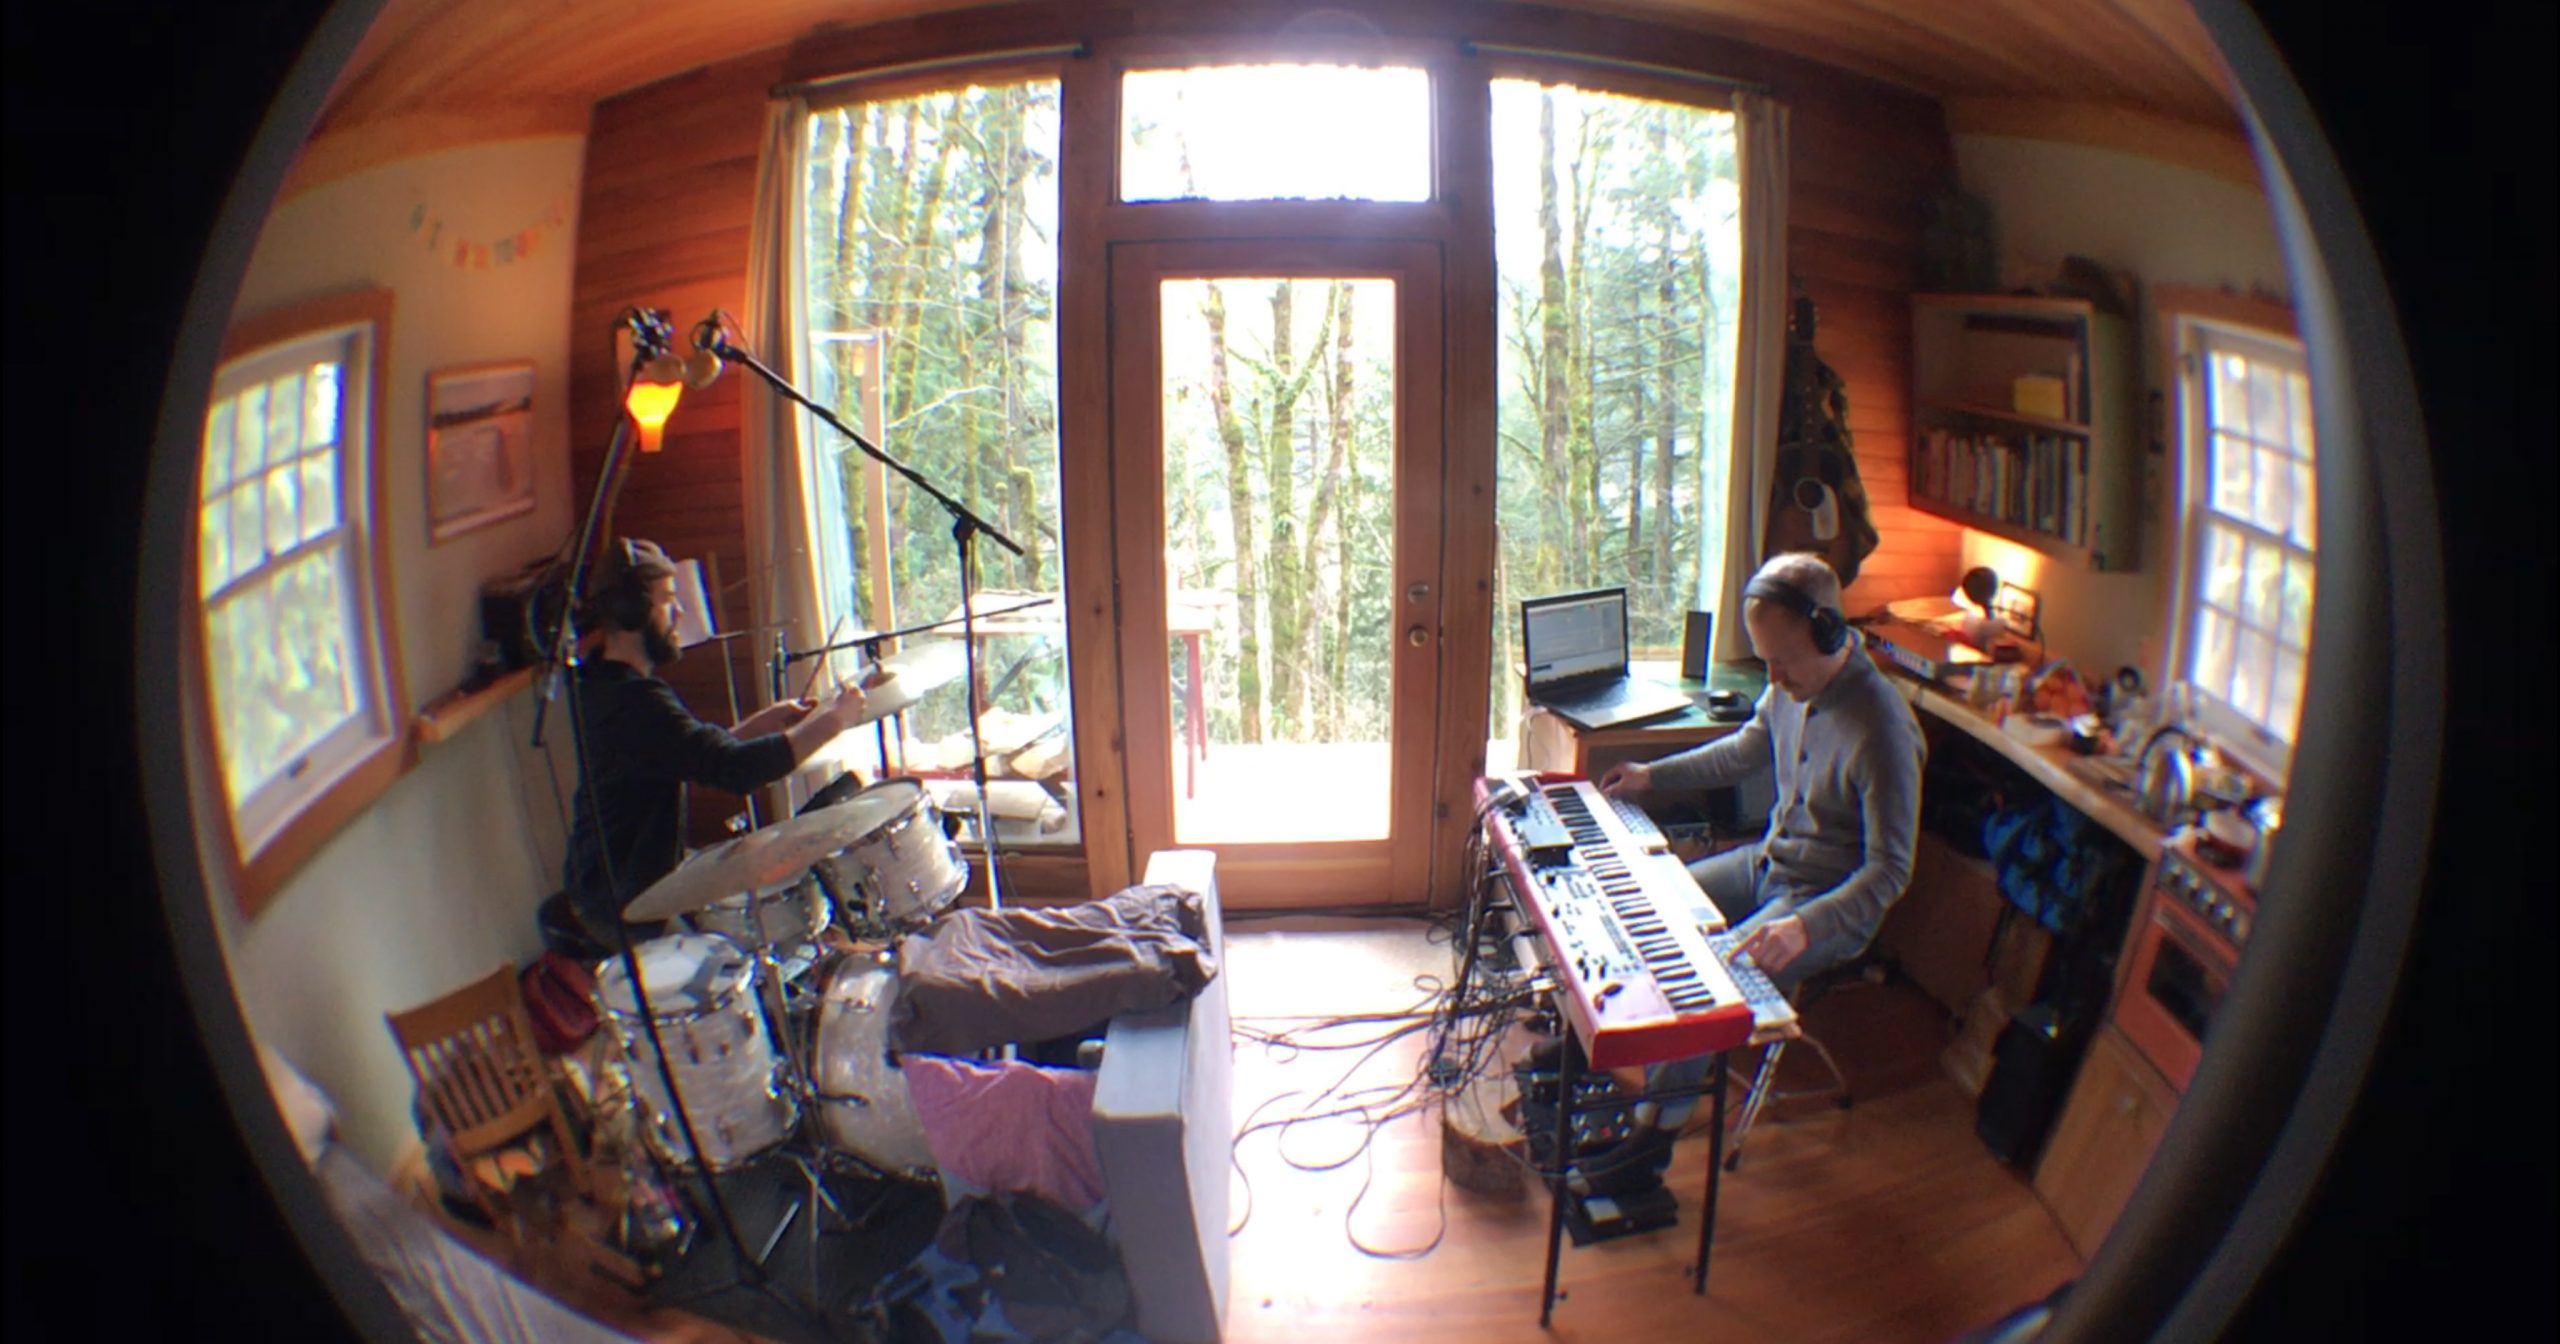 A fisheye lens photo of Methods Body (John Niekrasz on drumset and Luke Wyland on electric keyboard) performing in a cabin.